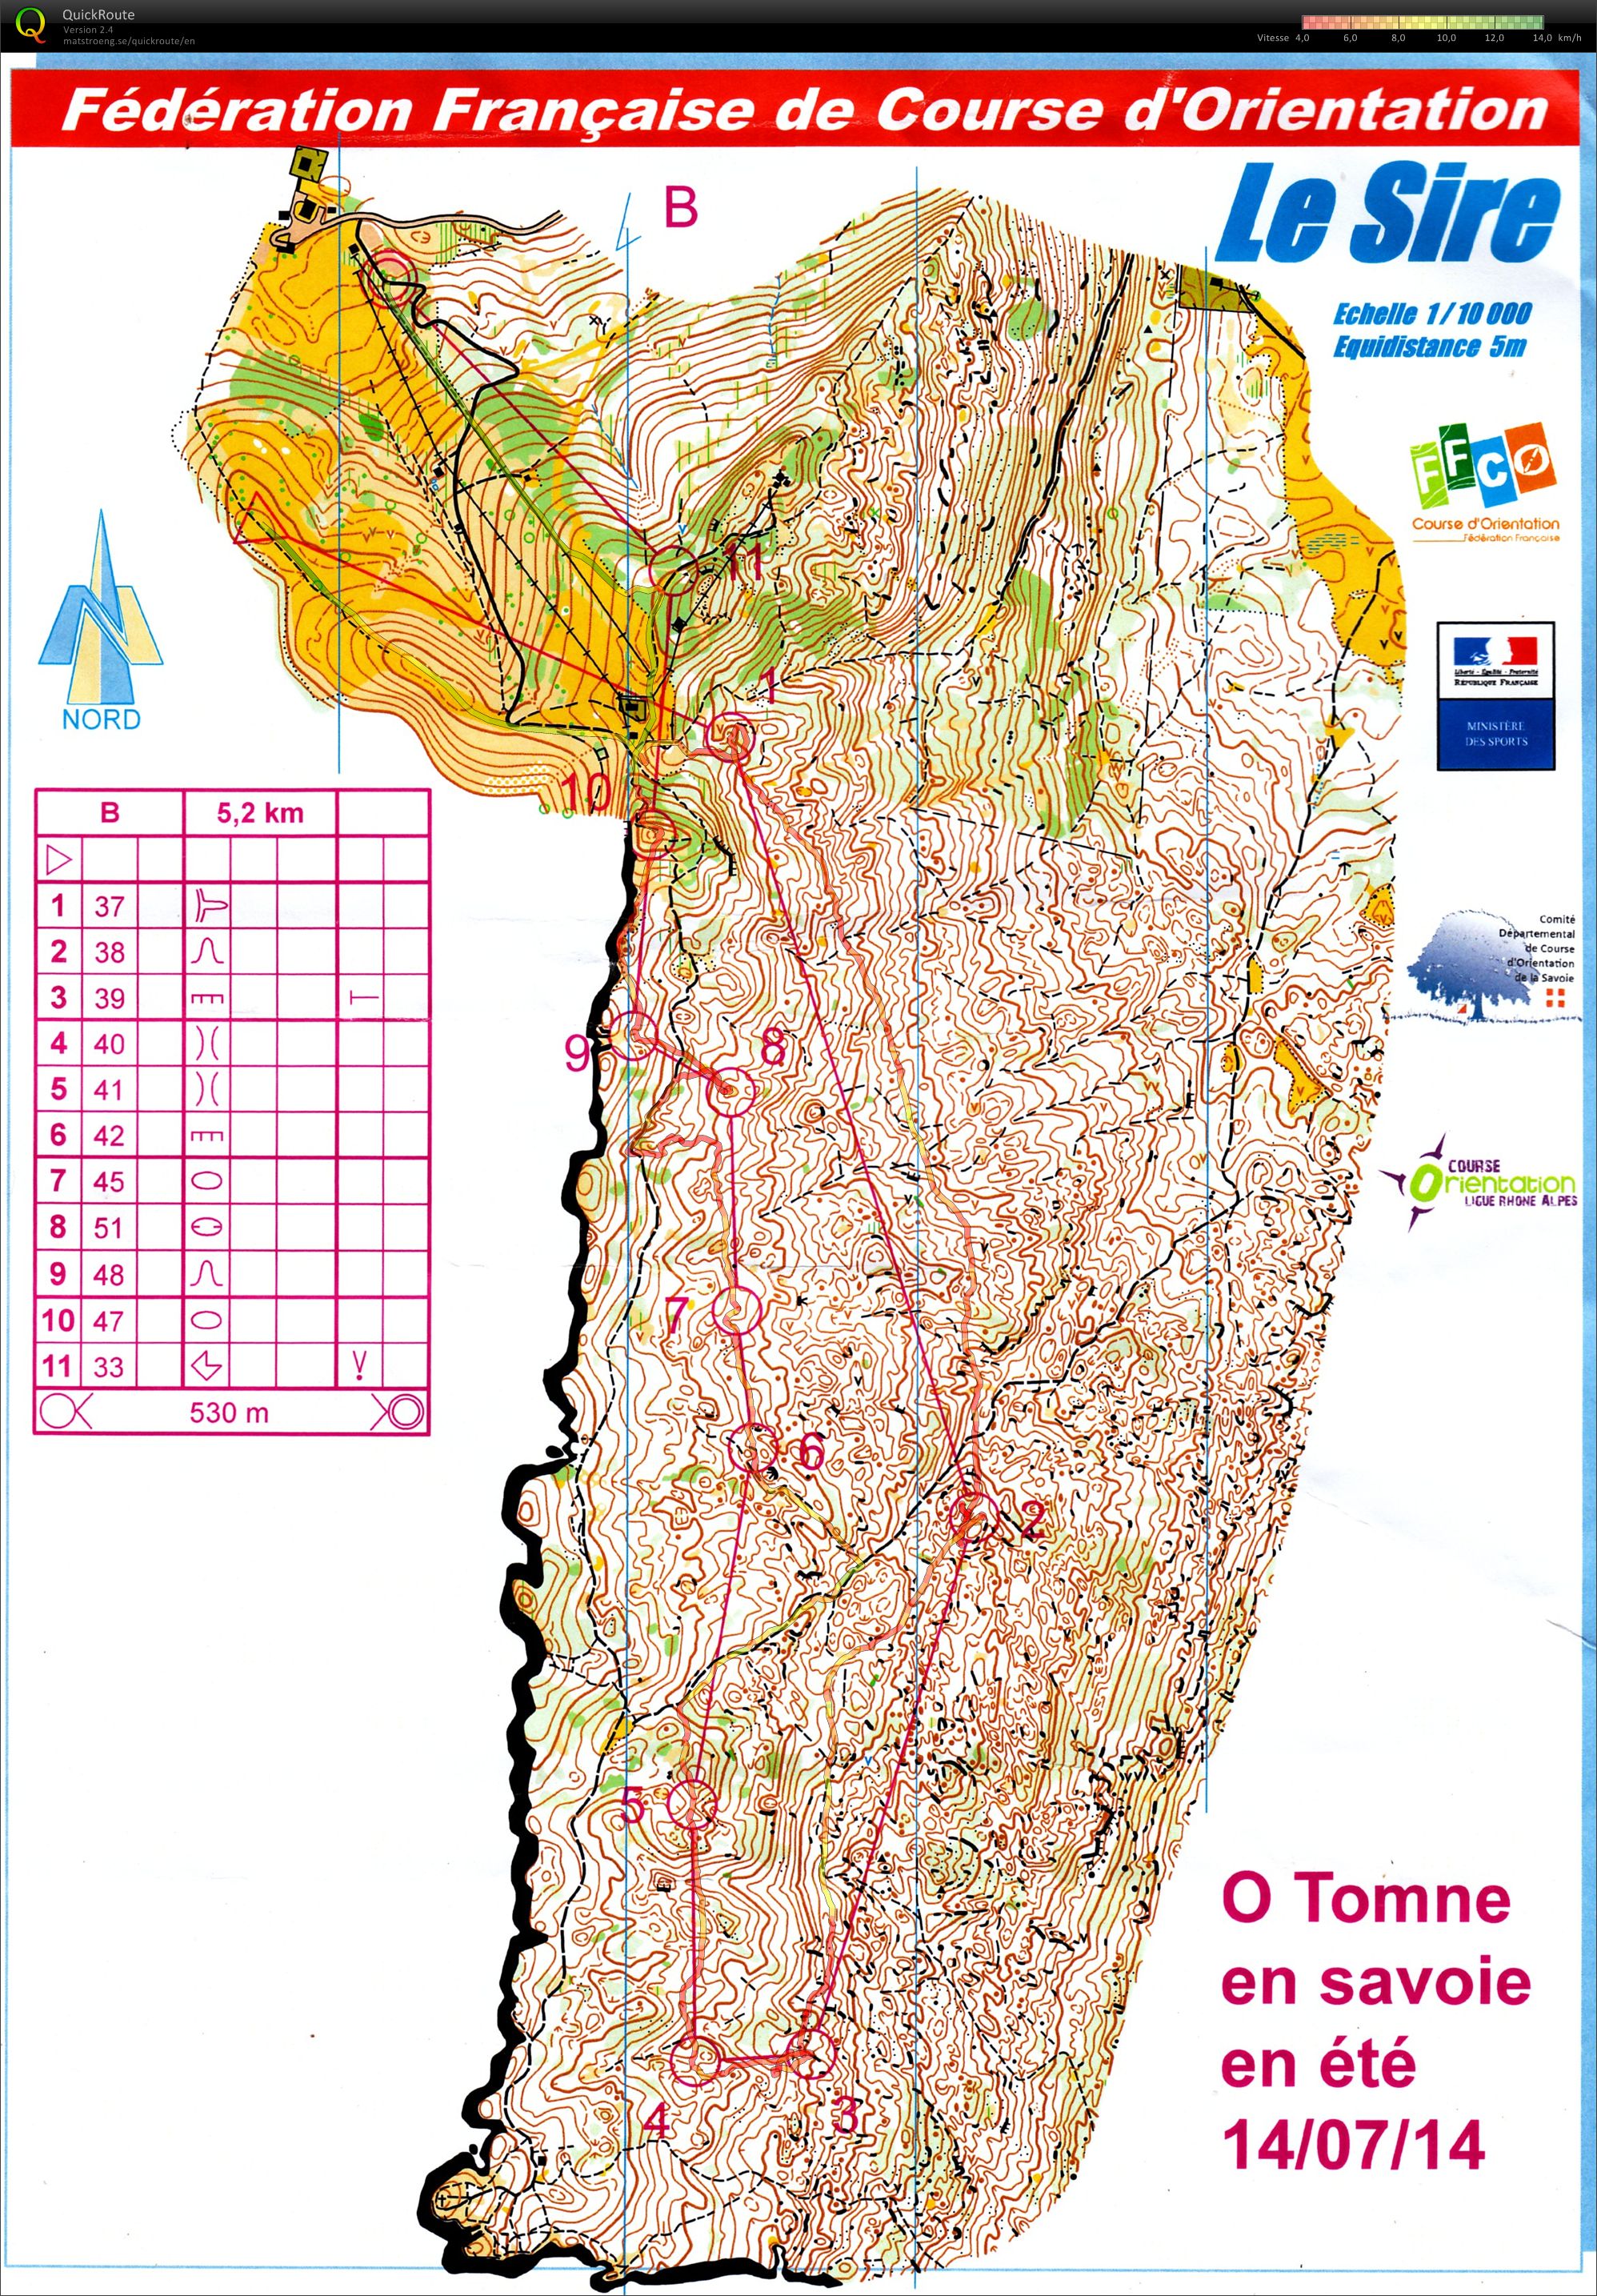 O'Tomne en Savoie Etape 5 (2014-07-14)